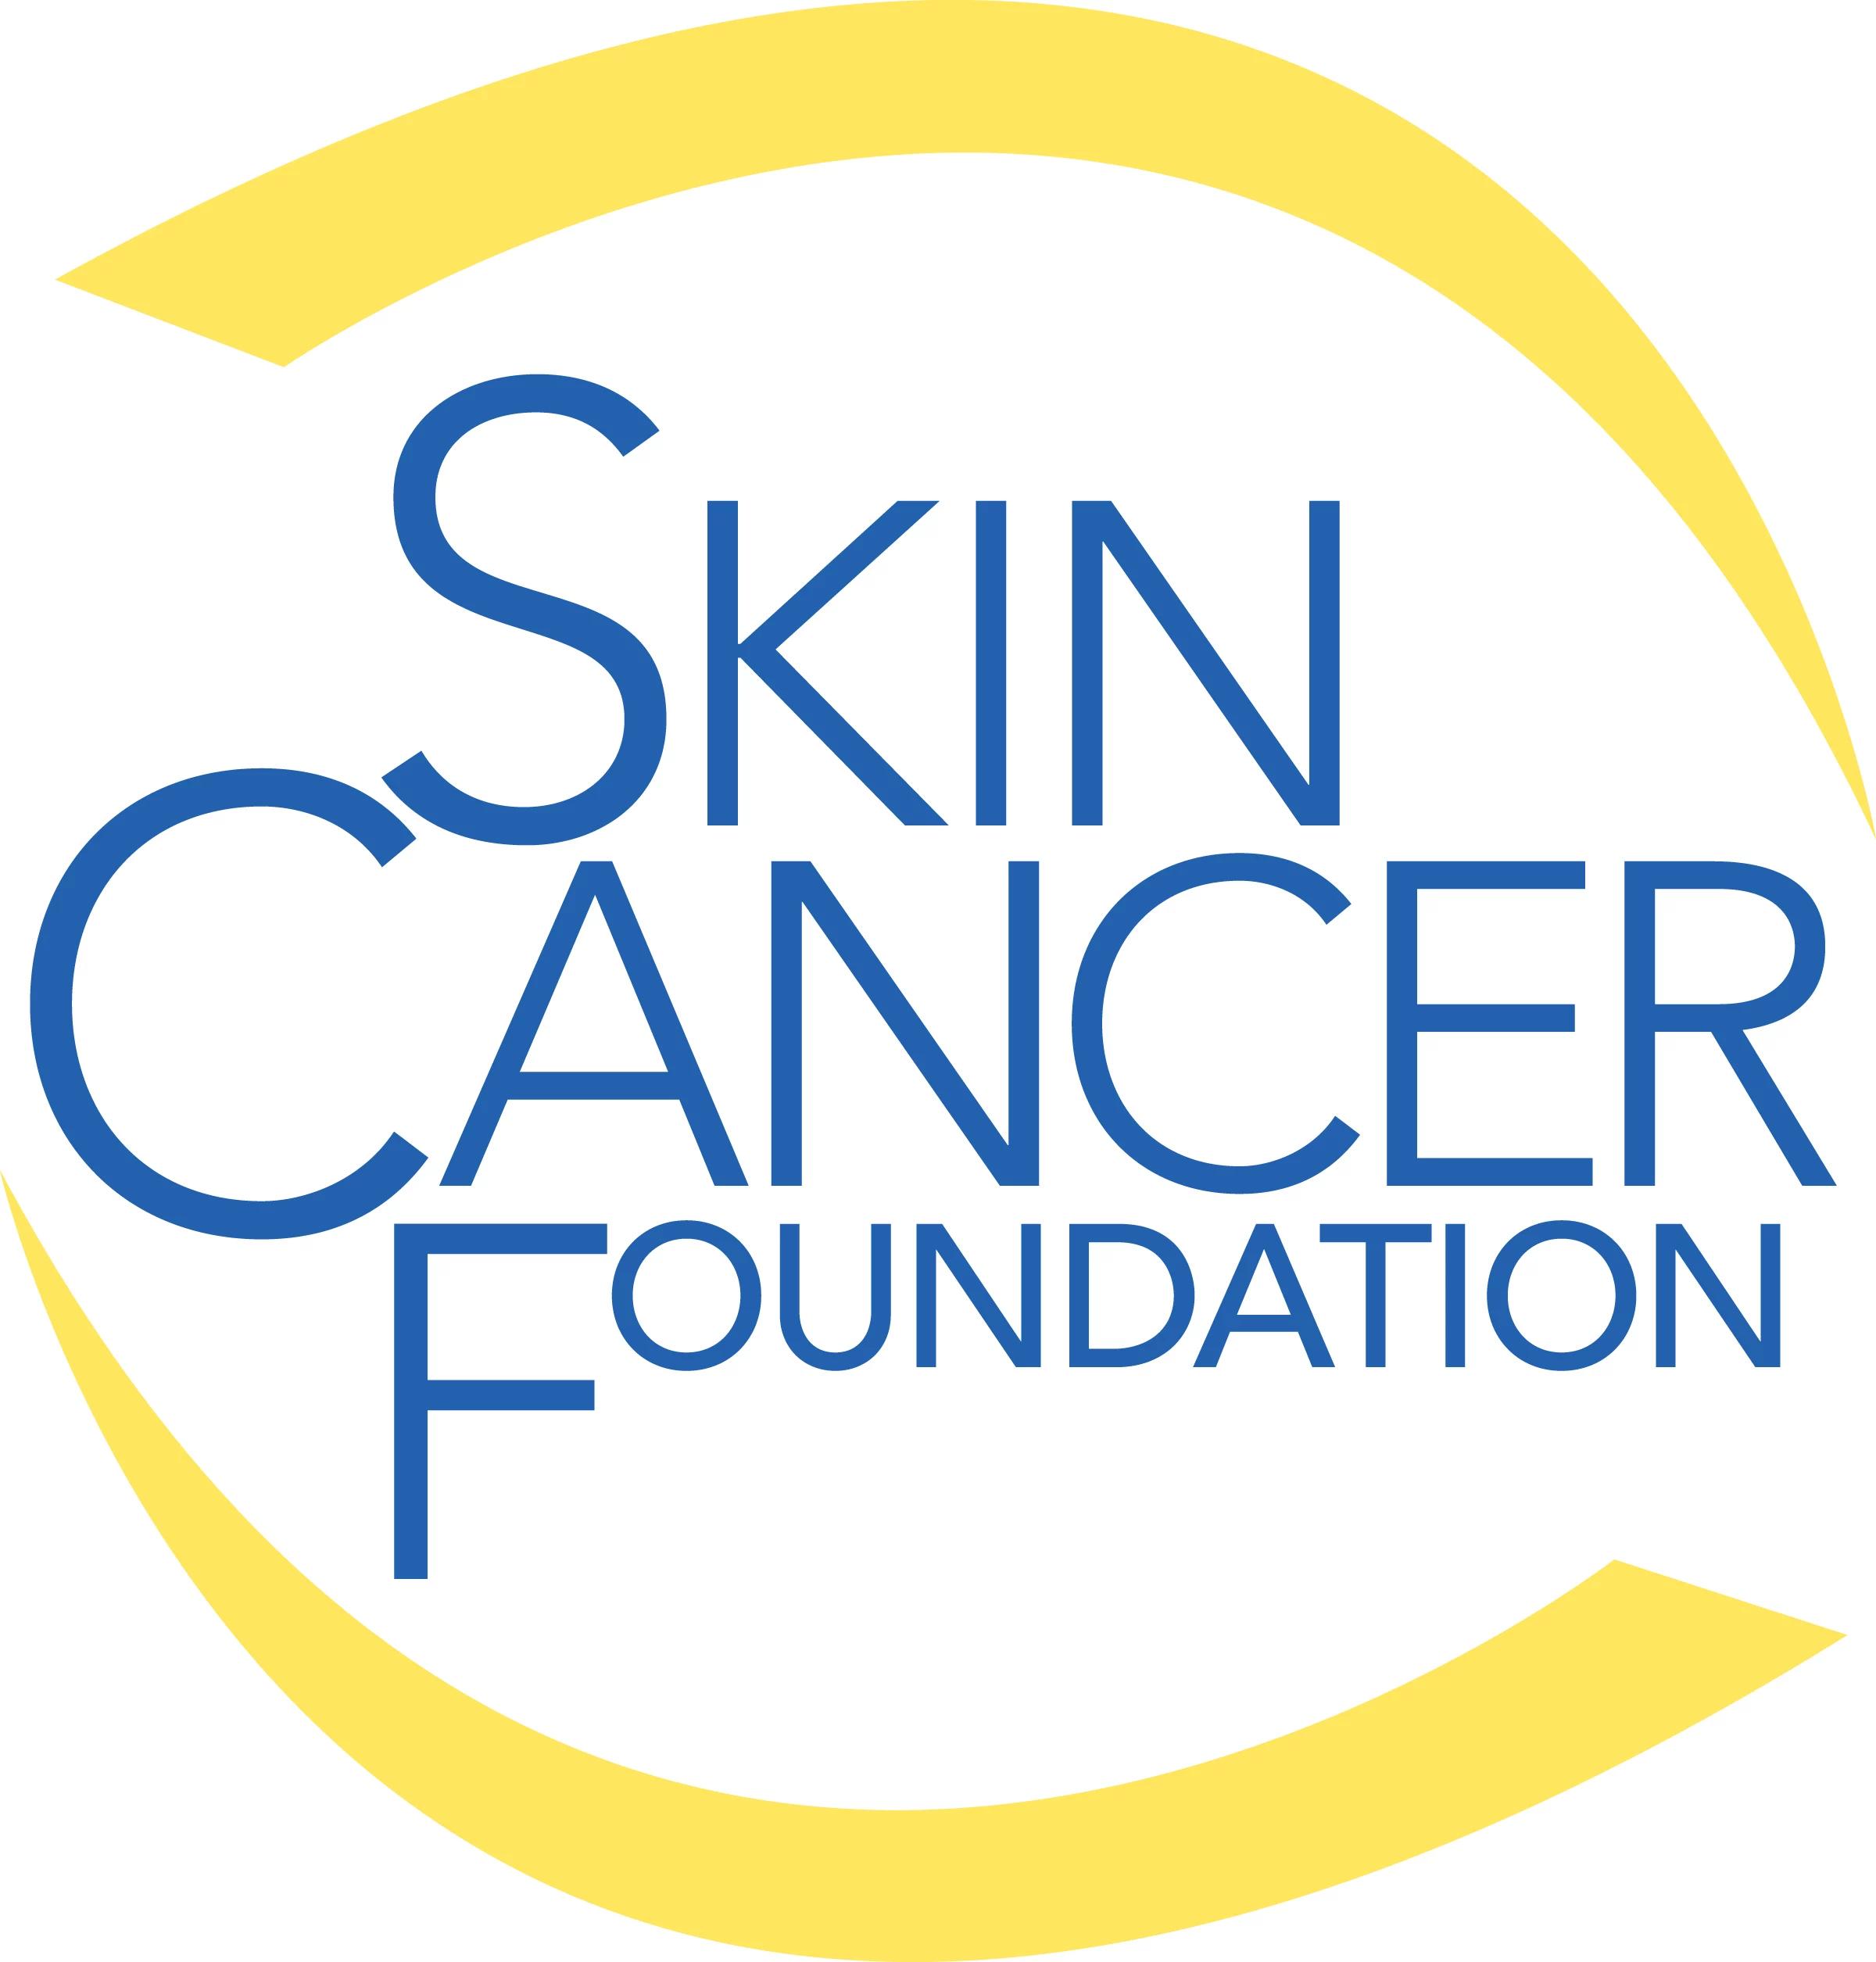 Skin Cancer Foundation logo